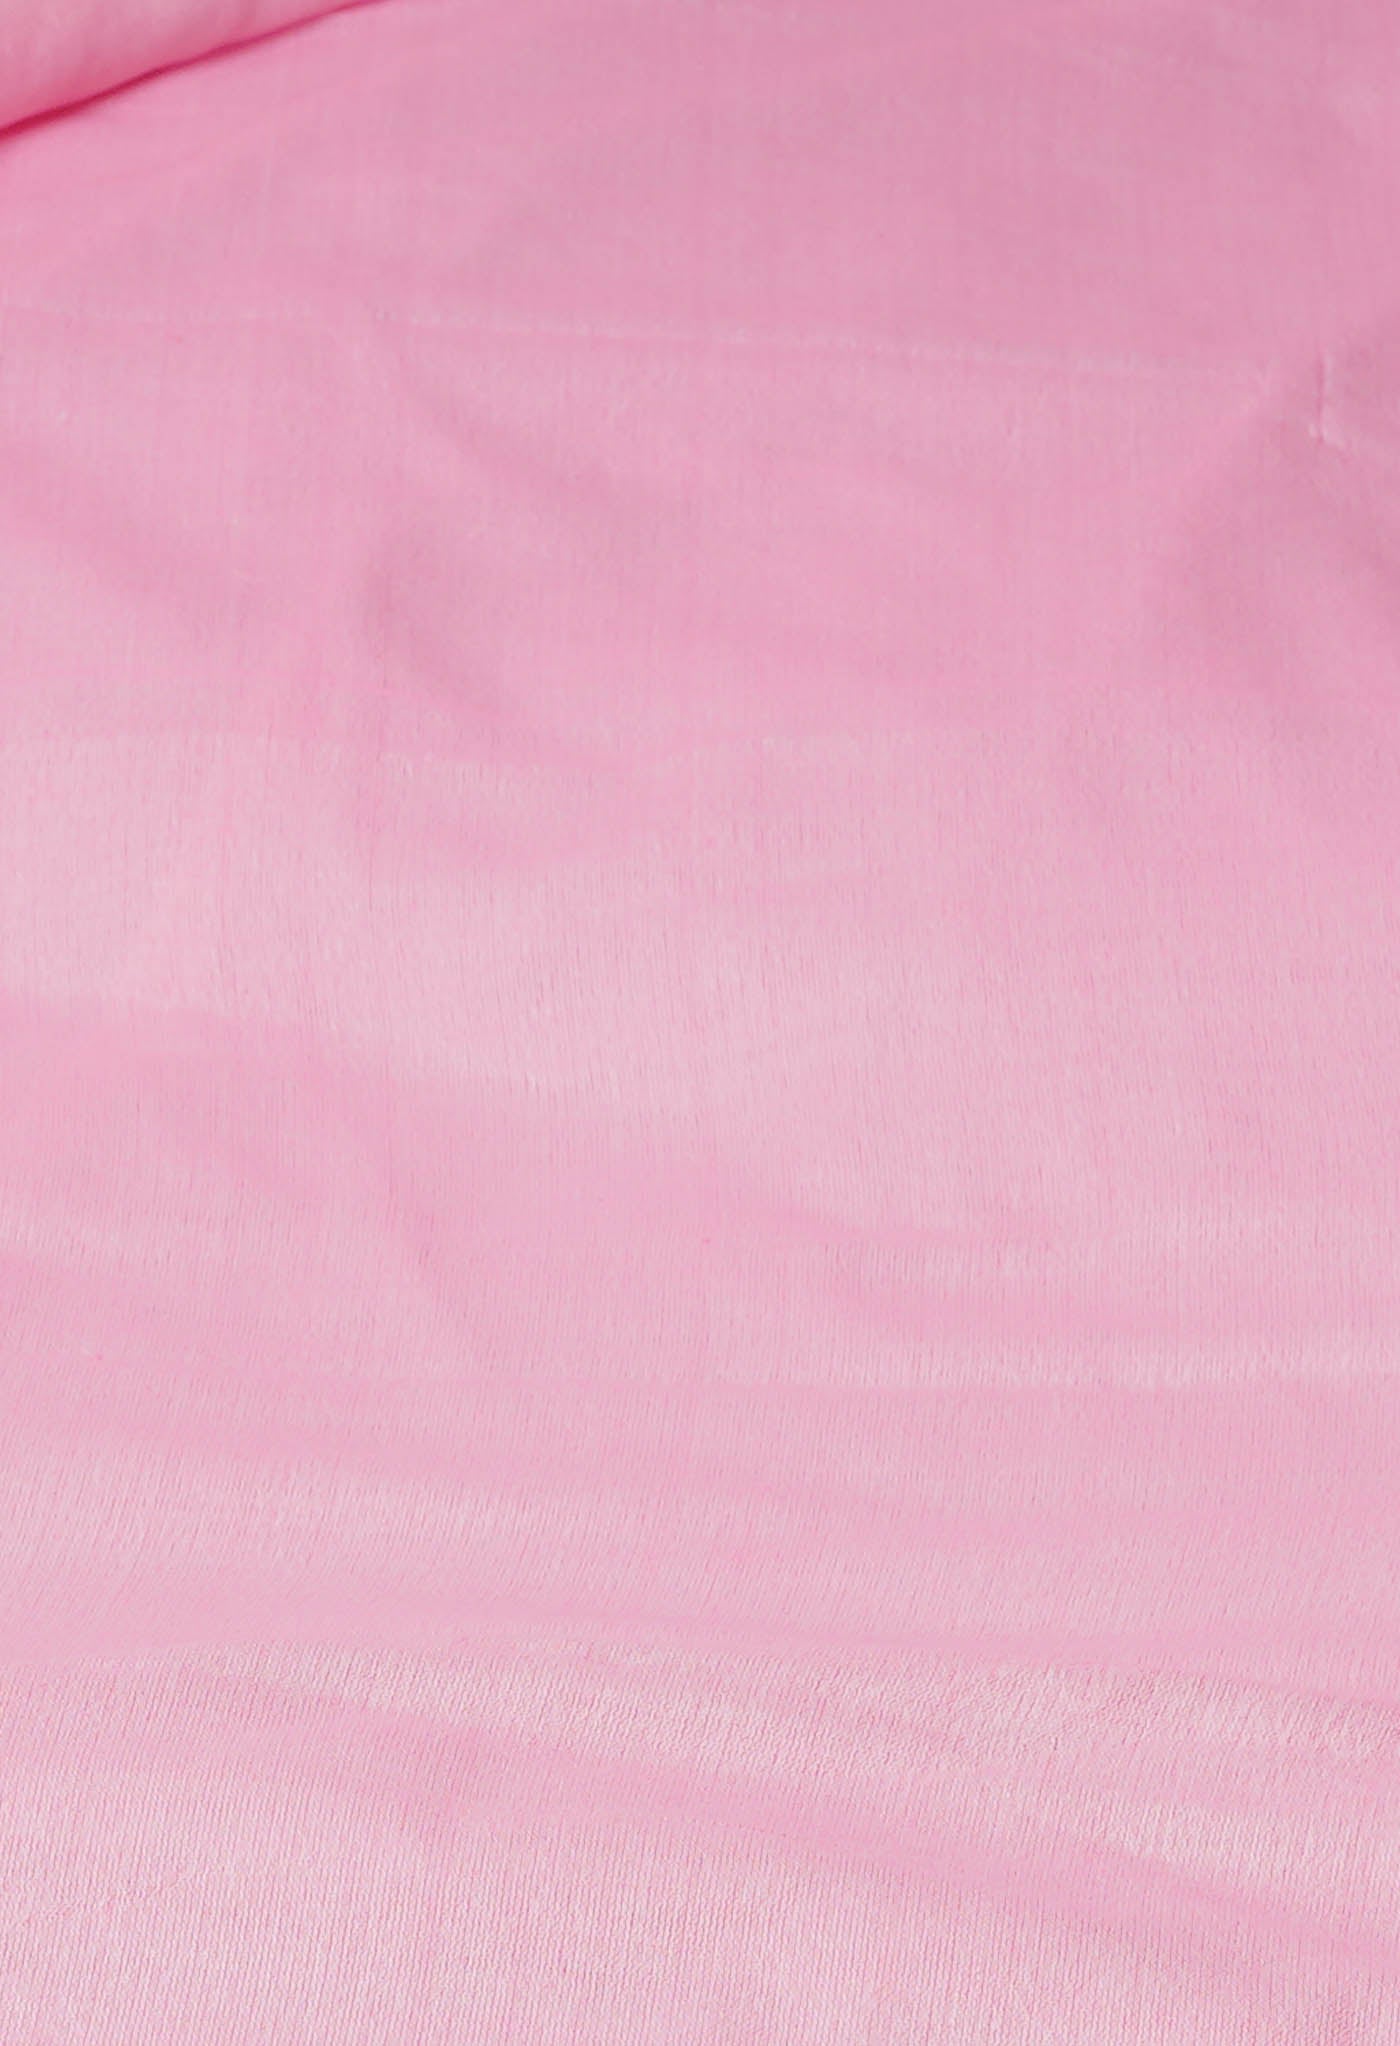 Pink Pure Cross Weave Plain Cotton Linen Saree With Tassels